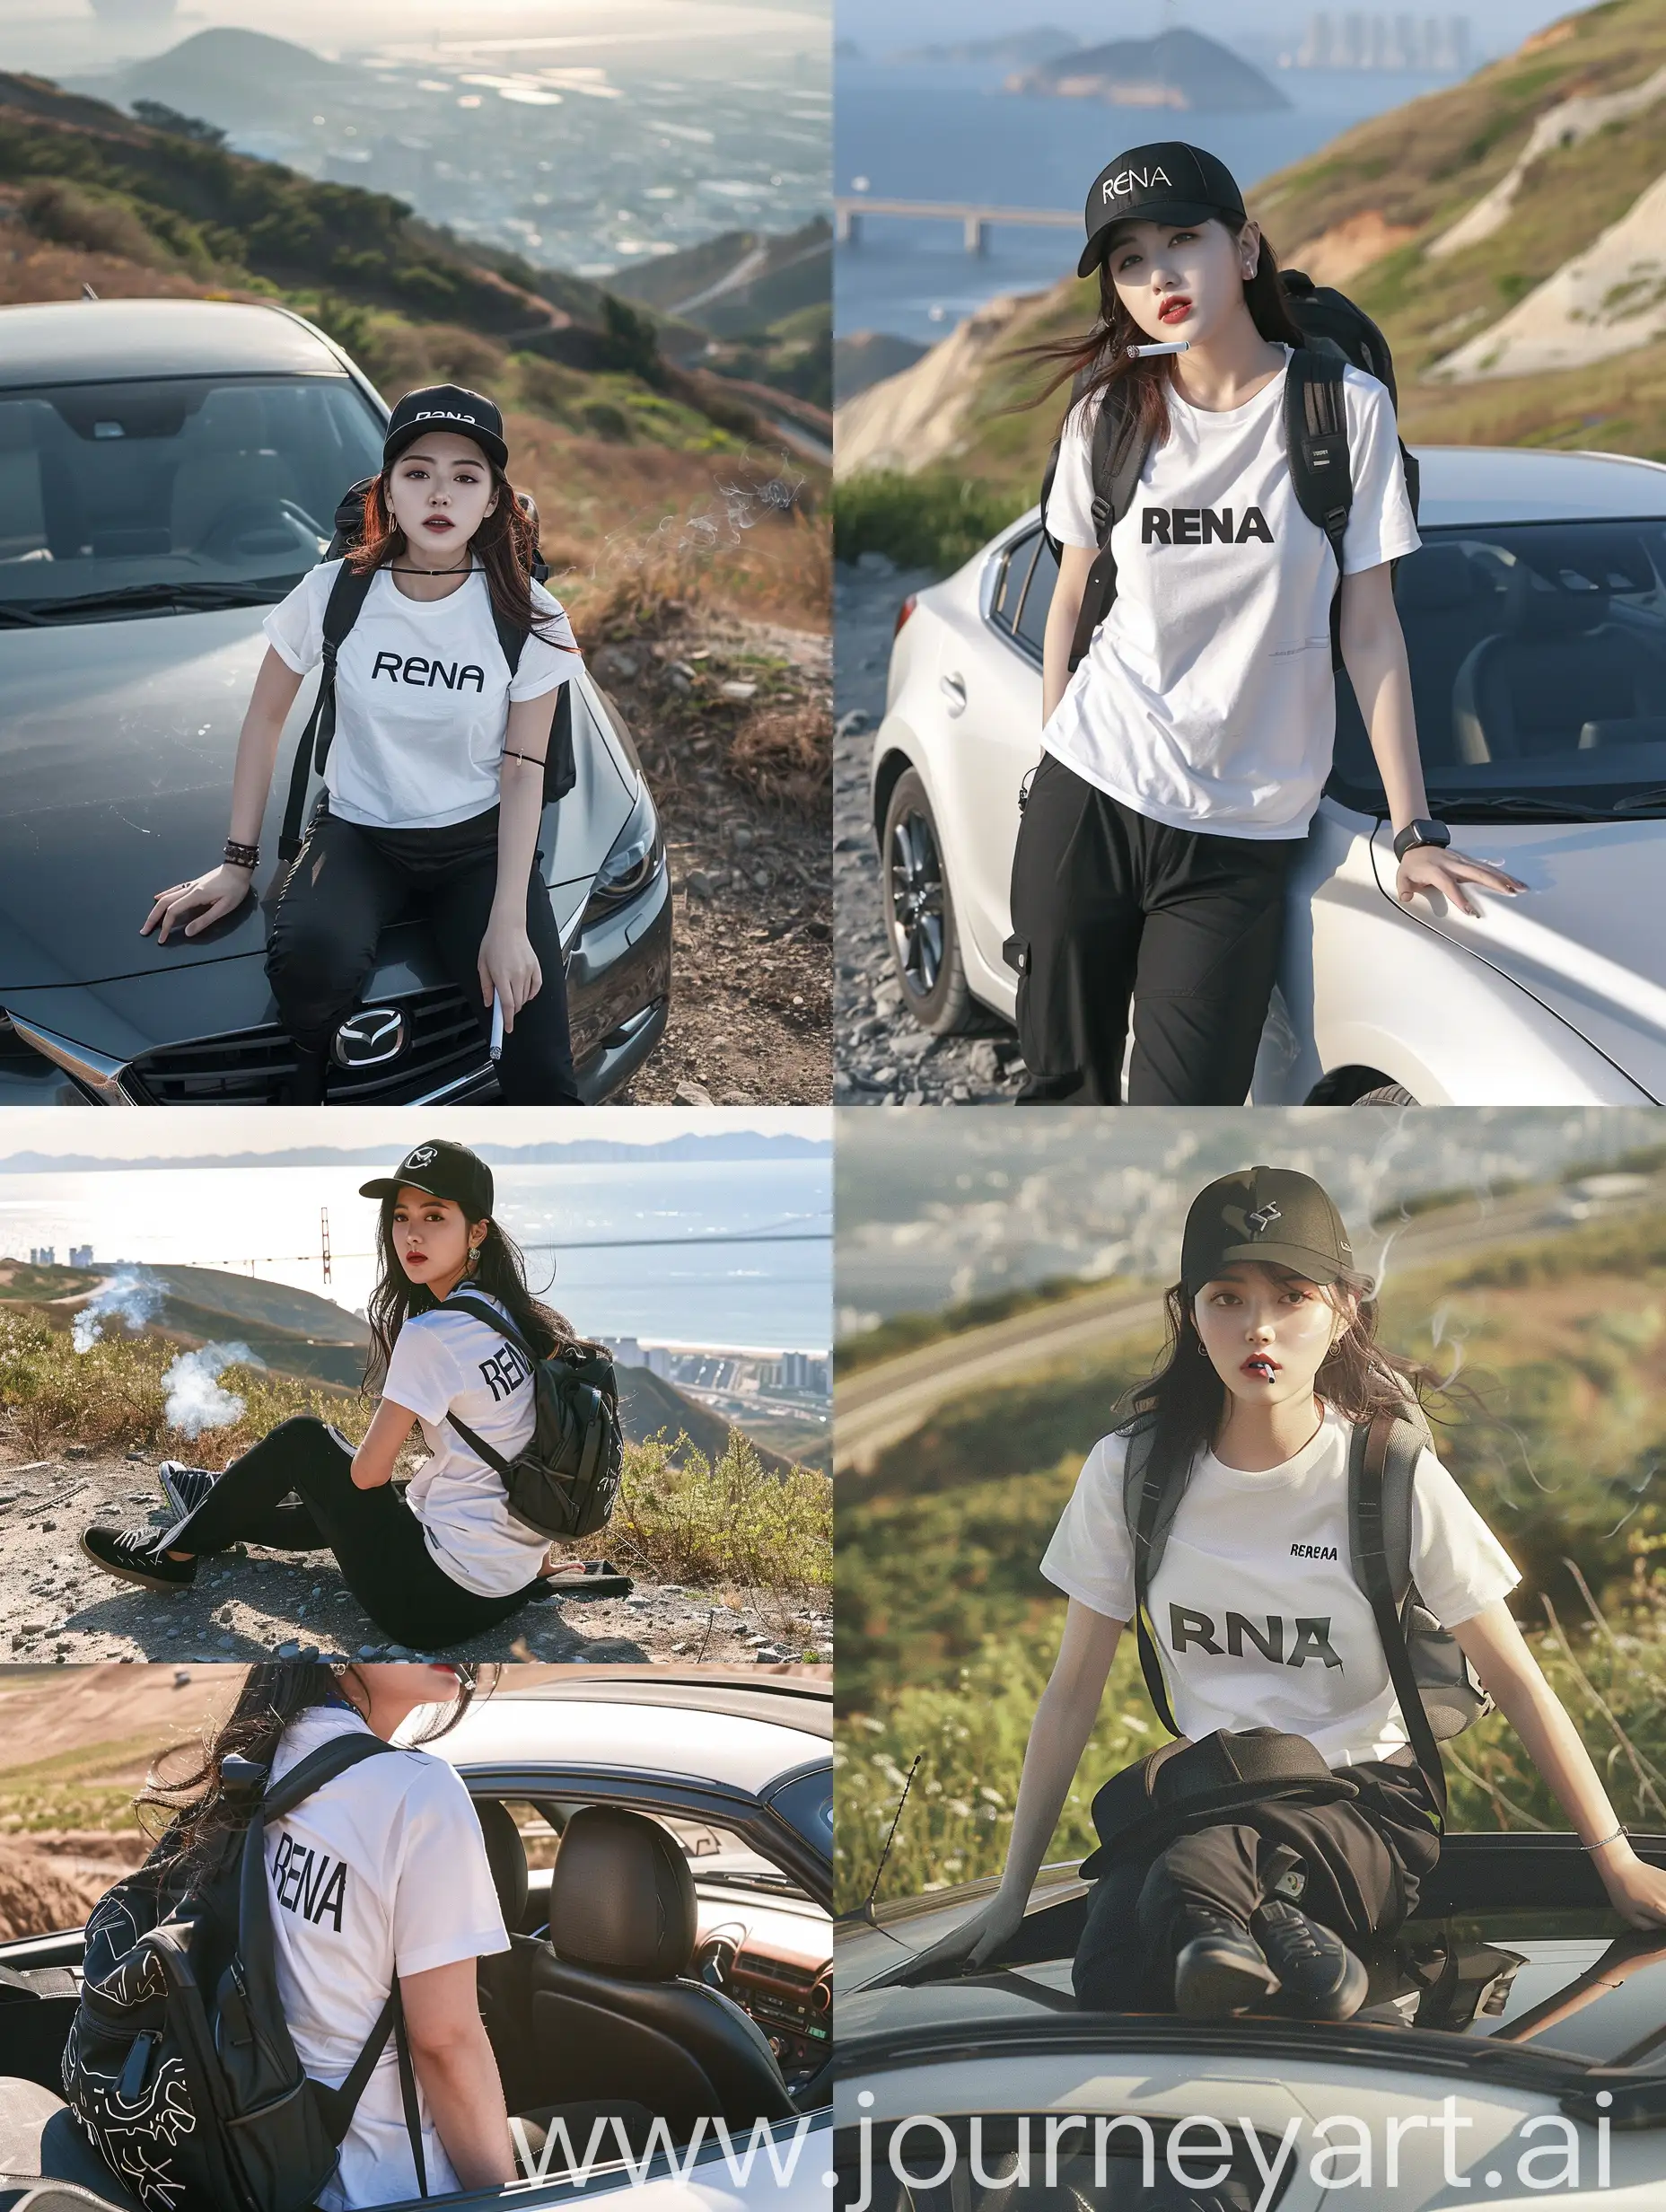 Korean-Woman-in-RENA-Branded-Apparel-Enjoying-Scenic-Hilltop-View-from-Mazda-Car